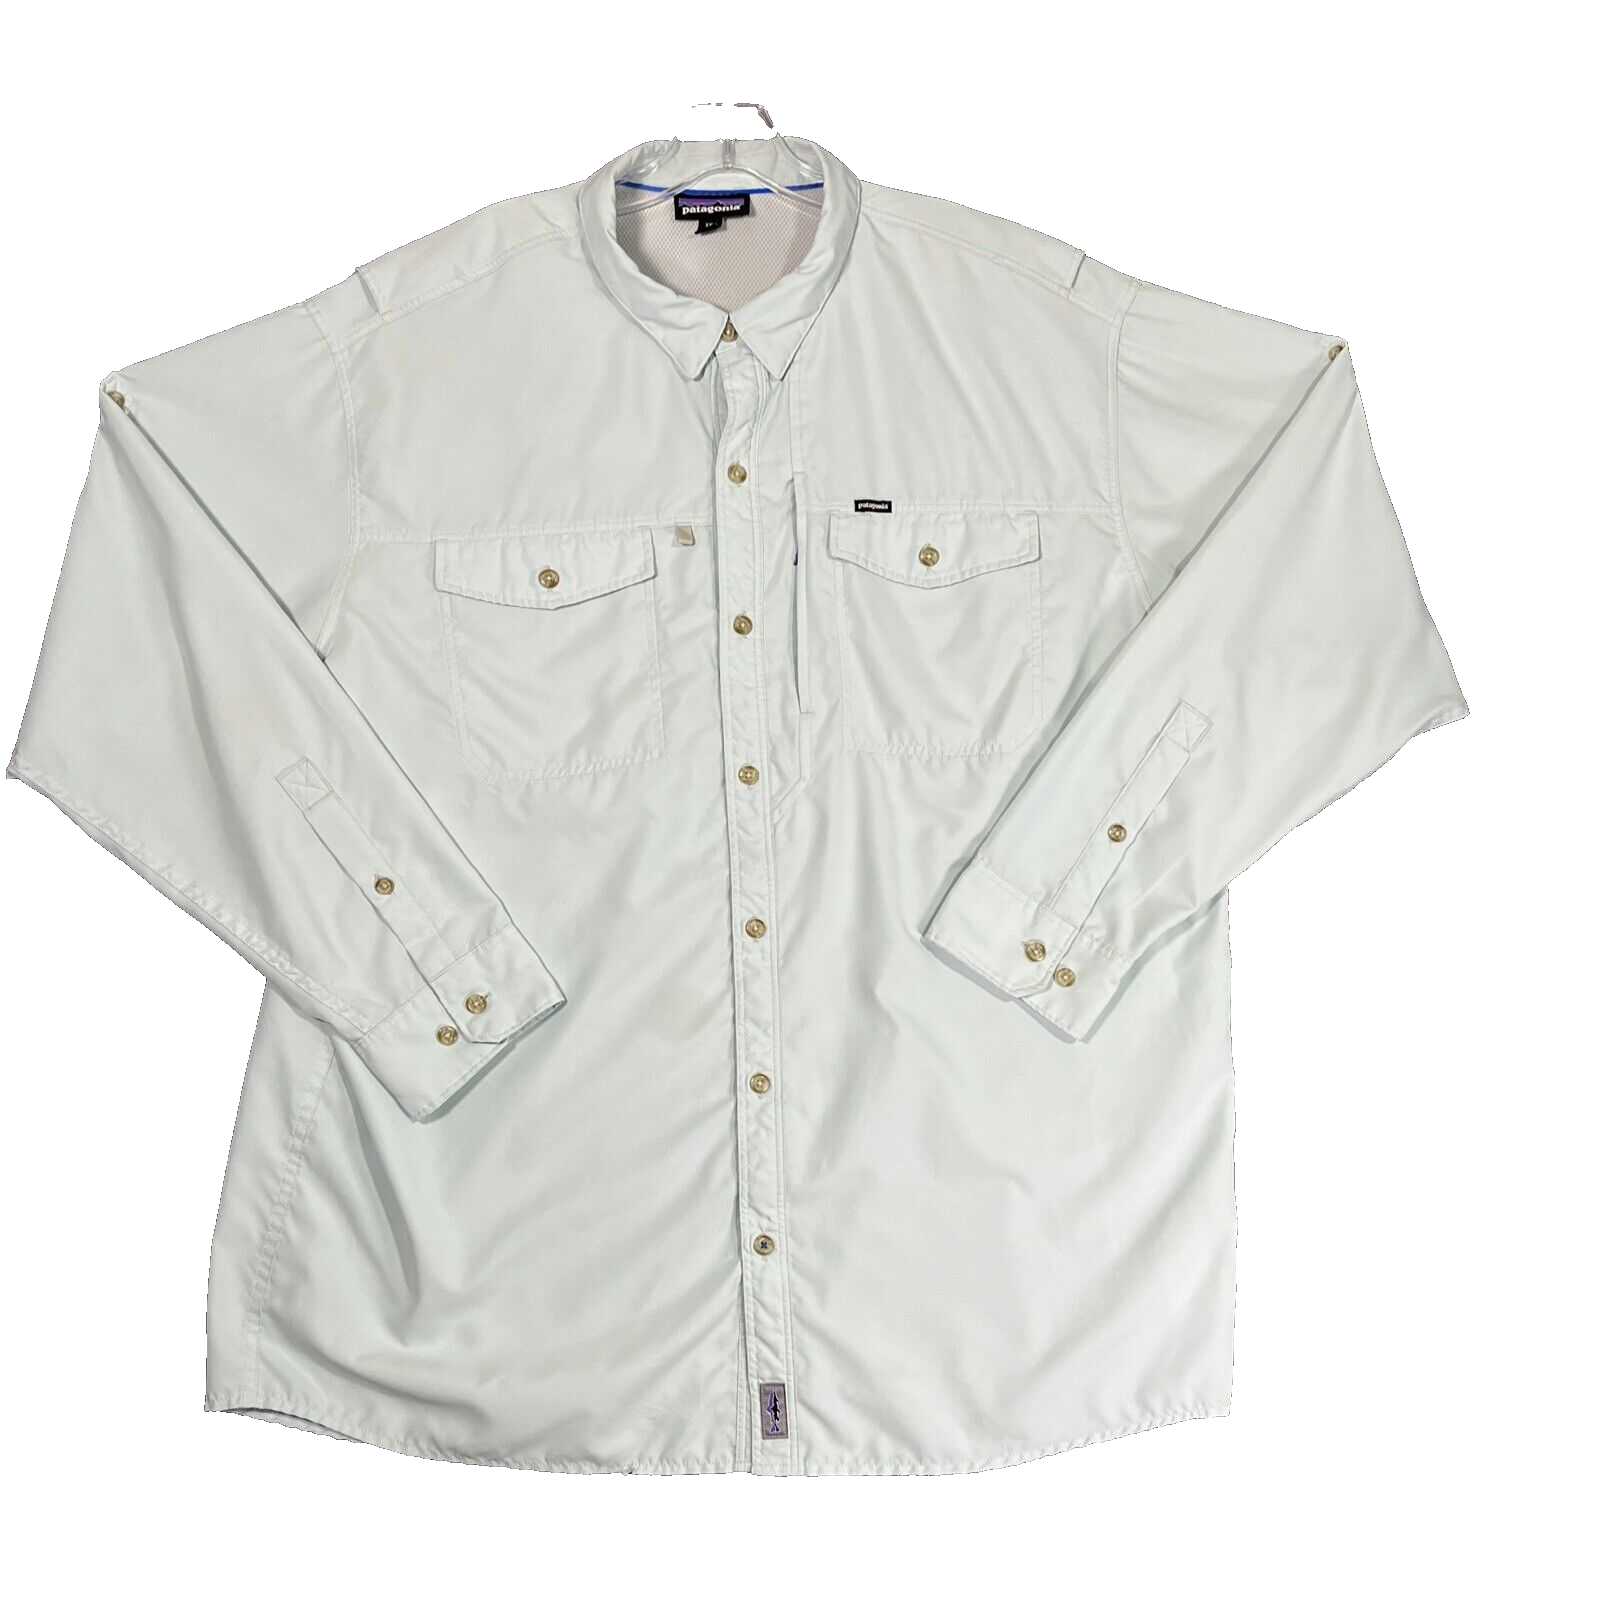 Patagonia Men's Go To Shirt Premium fly fishing shirts, pant